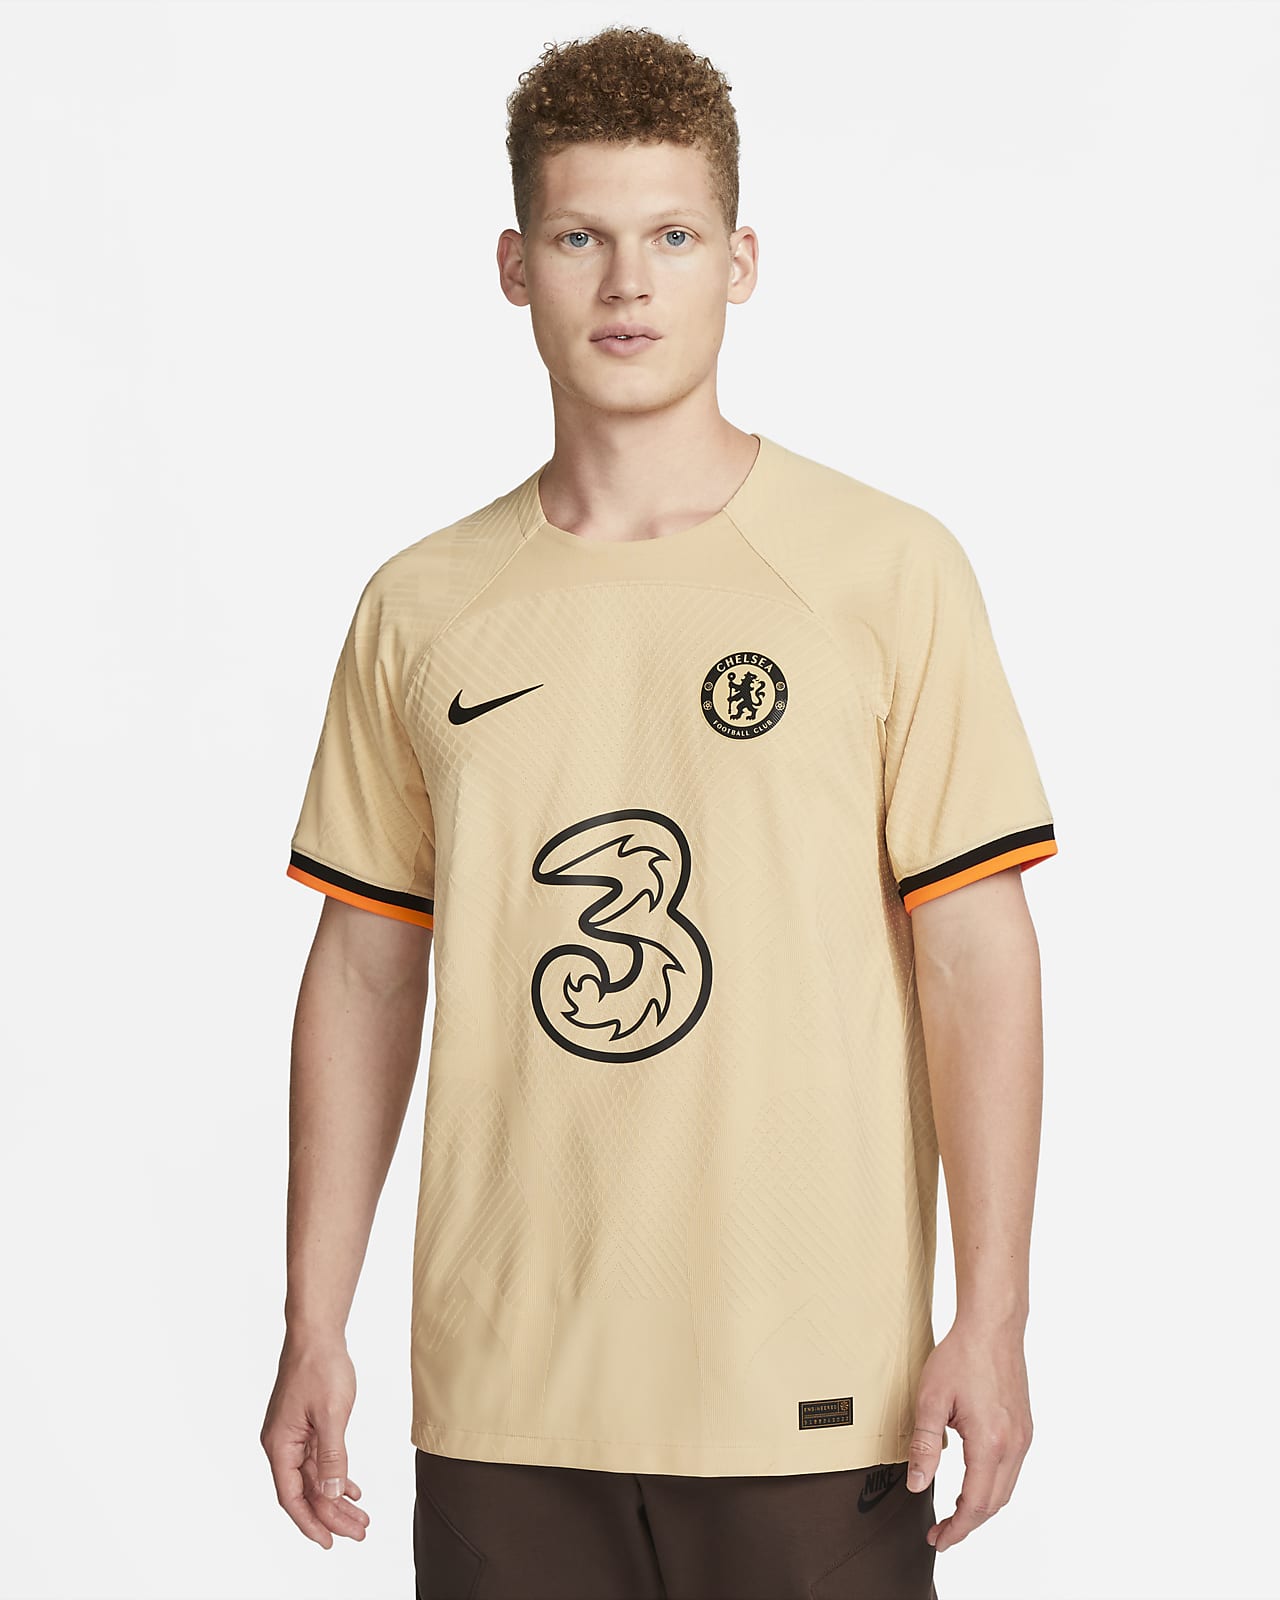 Chelsea 2022-23 Nike Third Kit - Football Shirt Culture - Latest ...